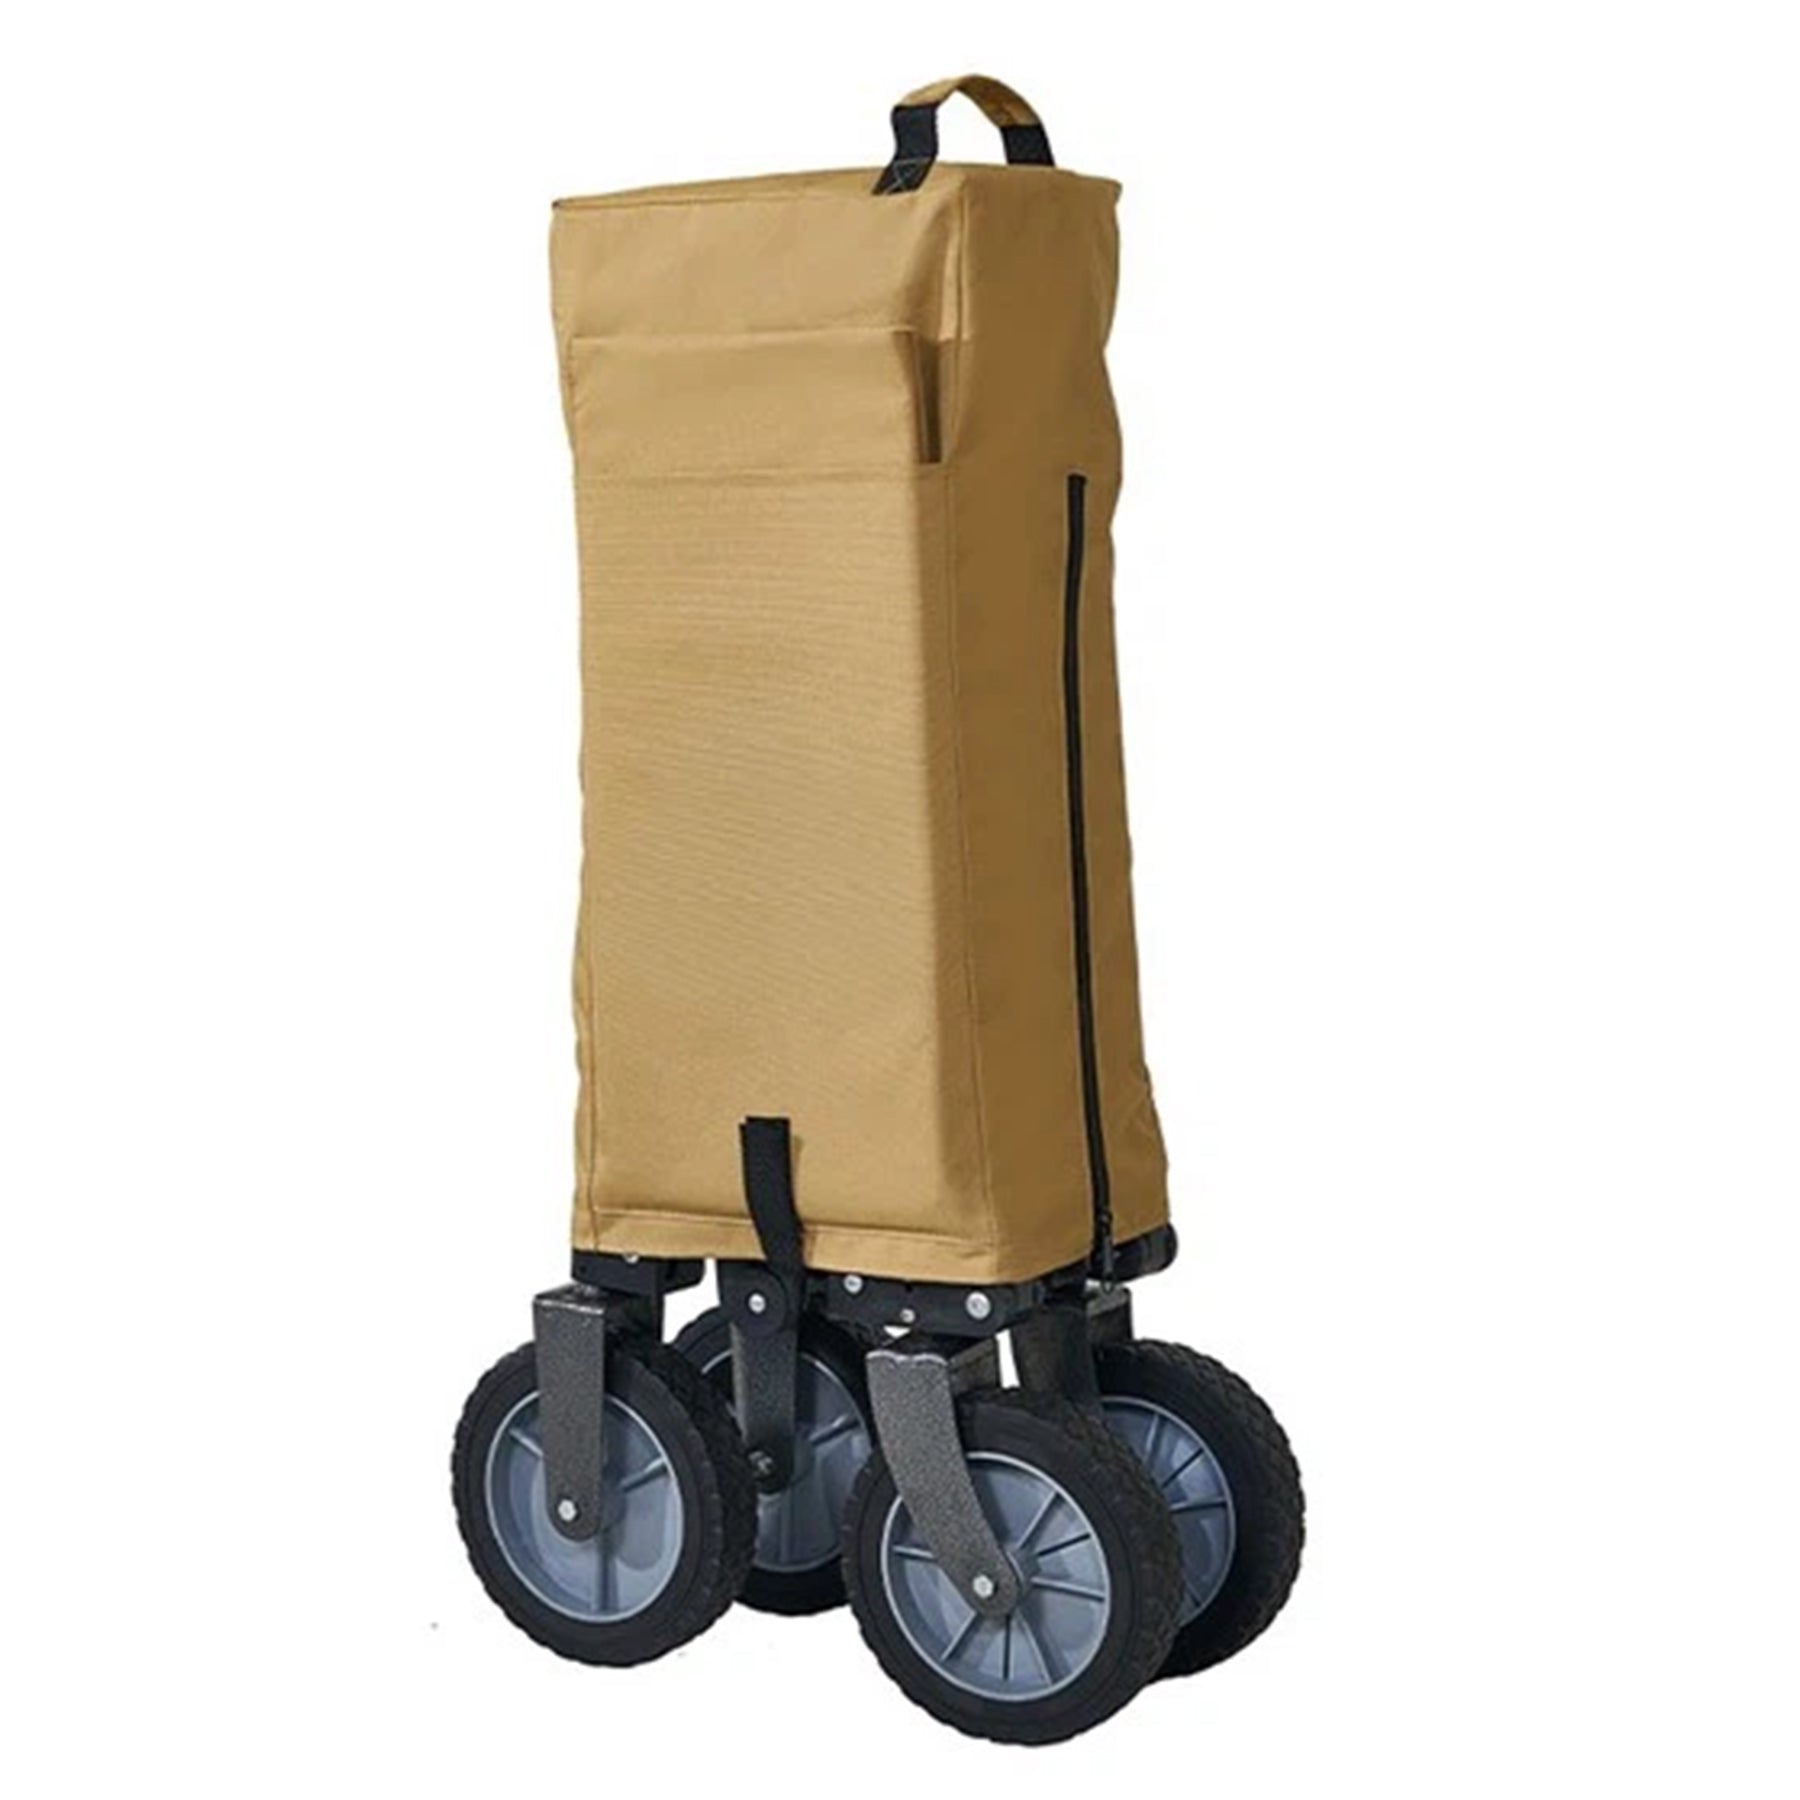 Foldable shopping Cart